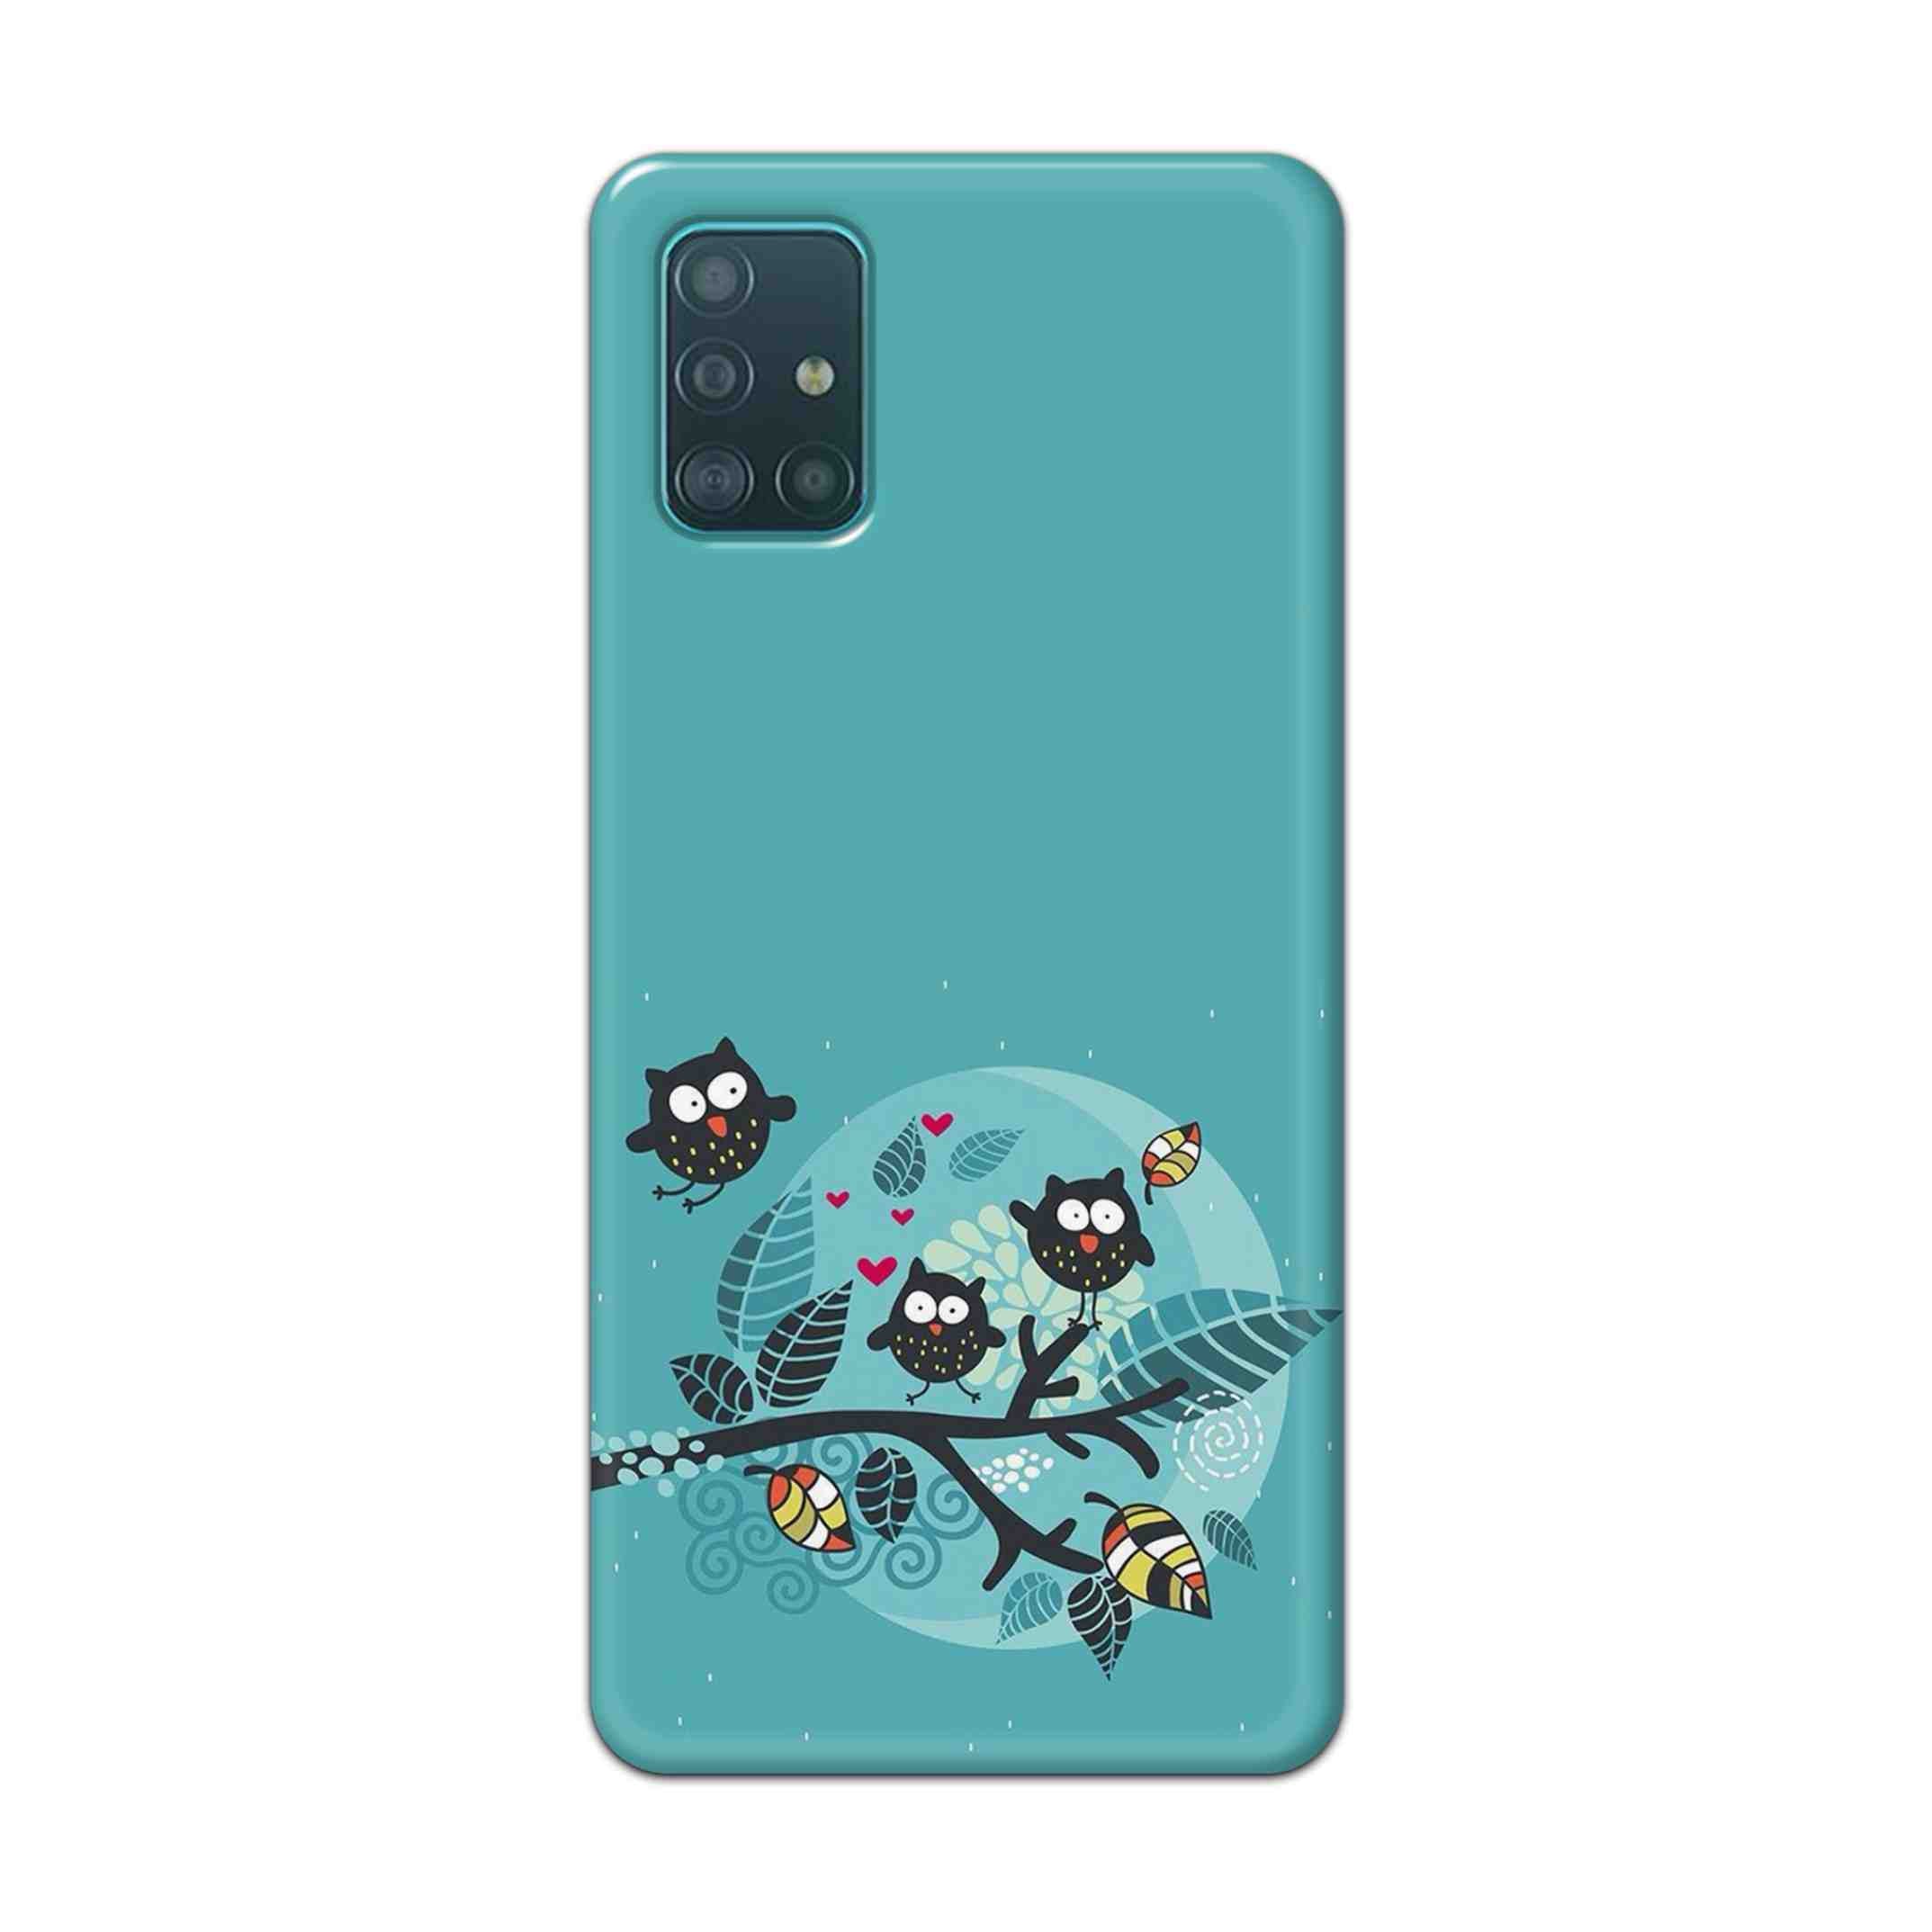 Buy Owl Hard Back Mobile Phone Case Cover For Samsung A51 Online